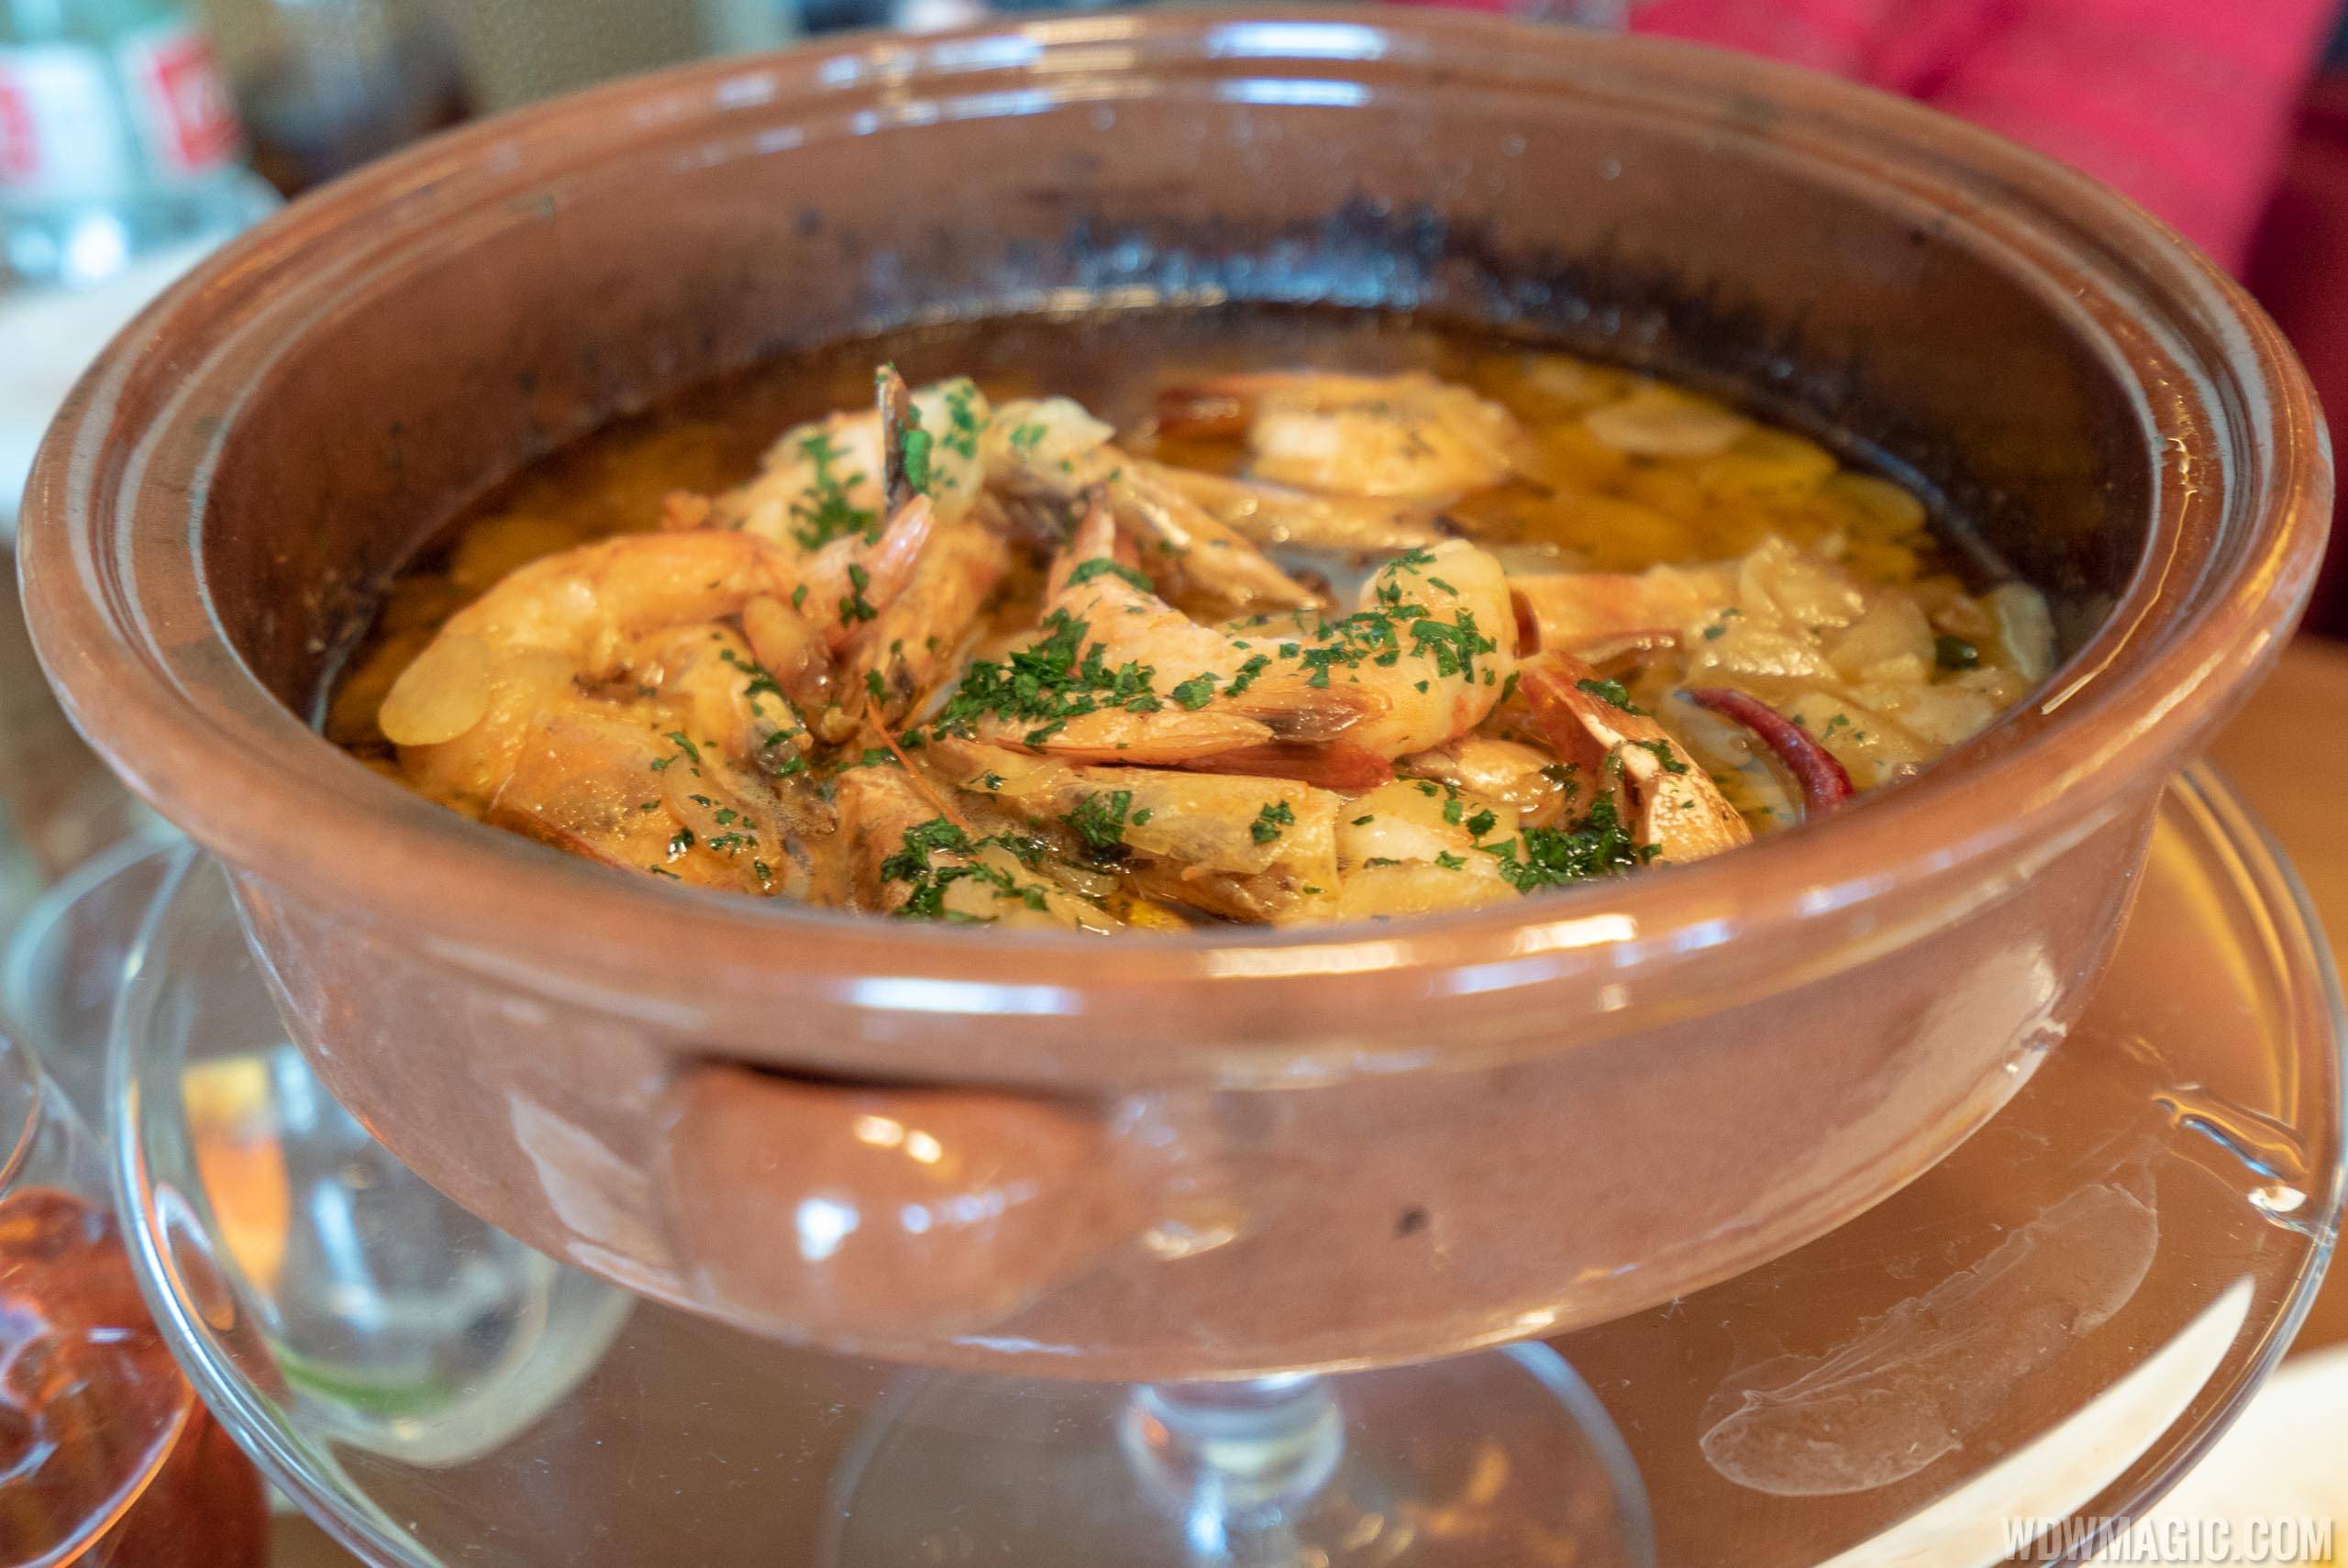 Chef's tasting menu: José's Way - Famous tapa of shrimp sautéed with garlic 